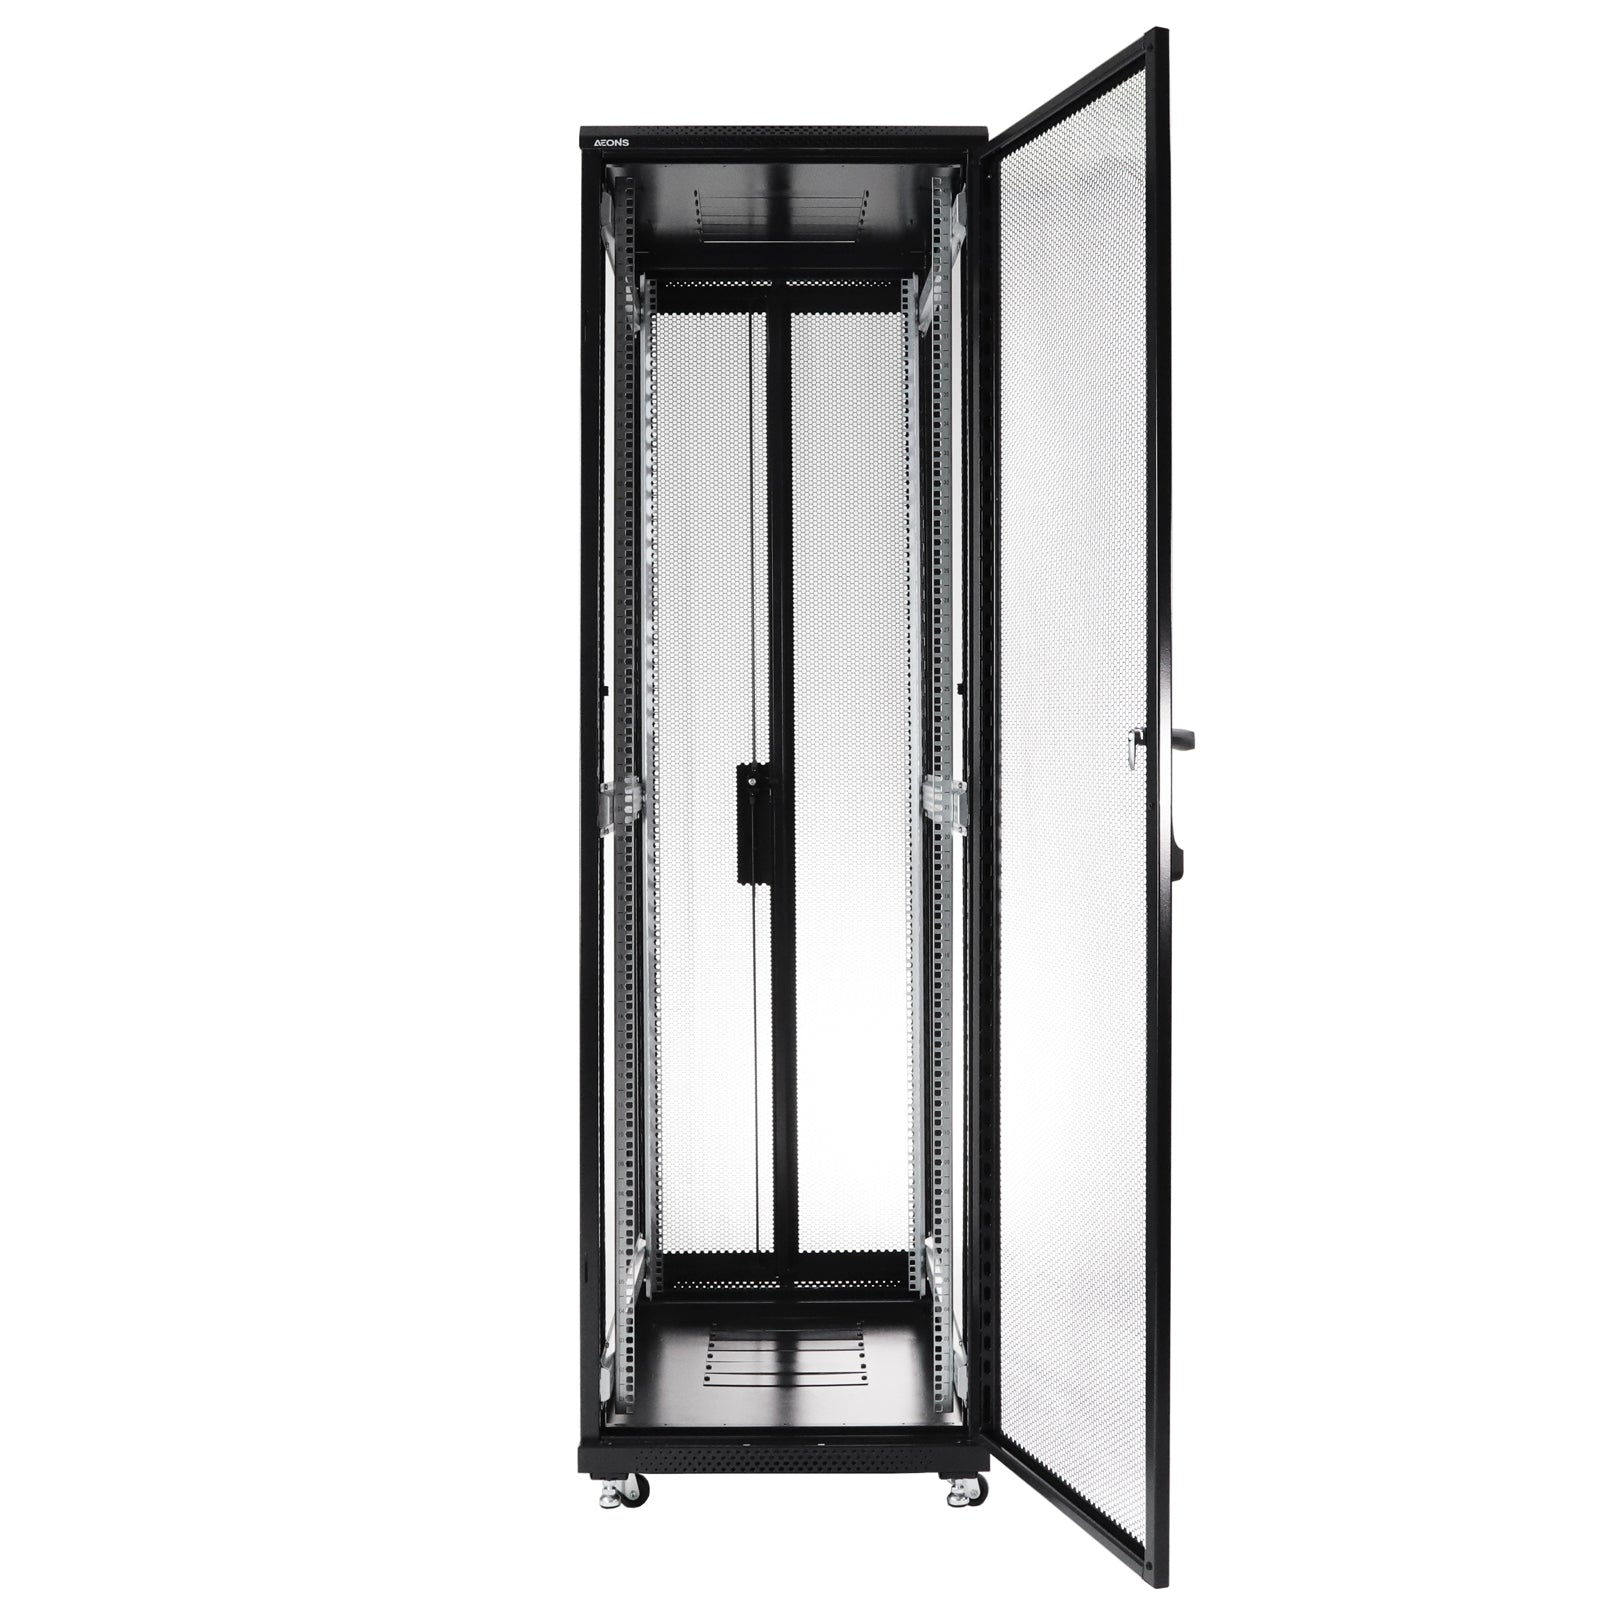 Aeons G-Seires 42U Professional Server Rack Enclosure Cabinet Kit, Mid-Depth, Secure Perforated Door, Cable Management